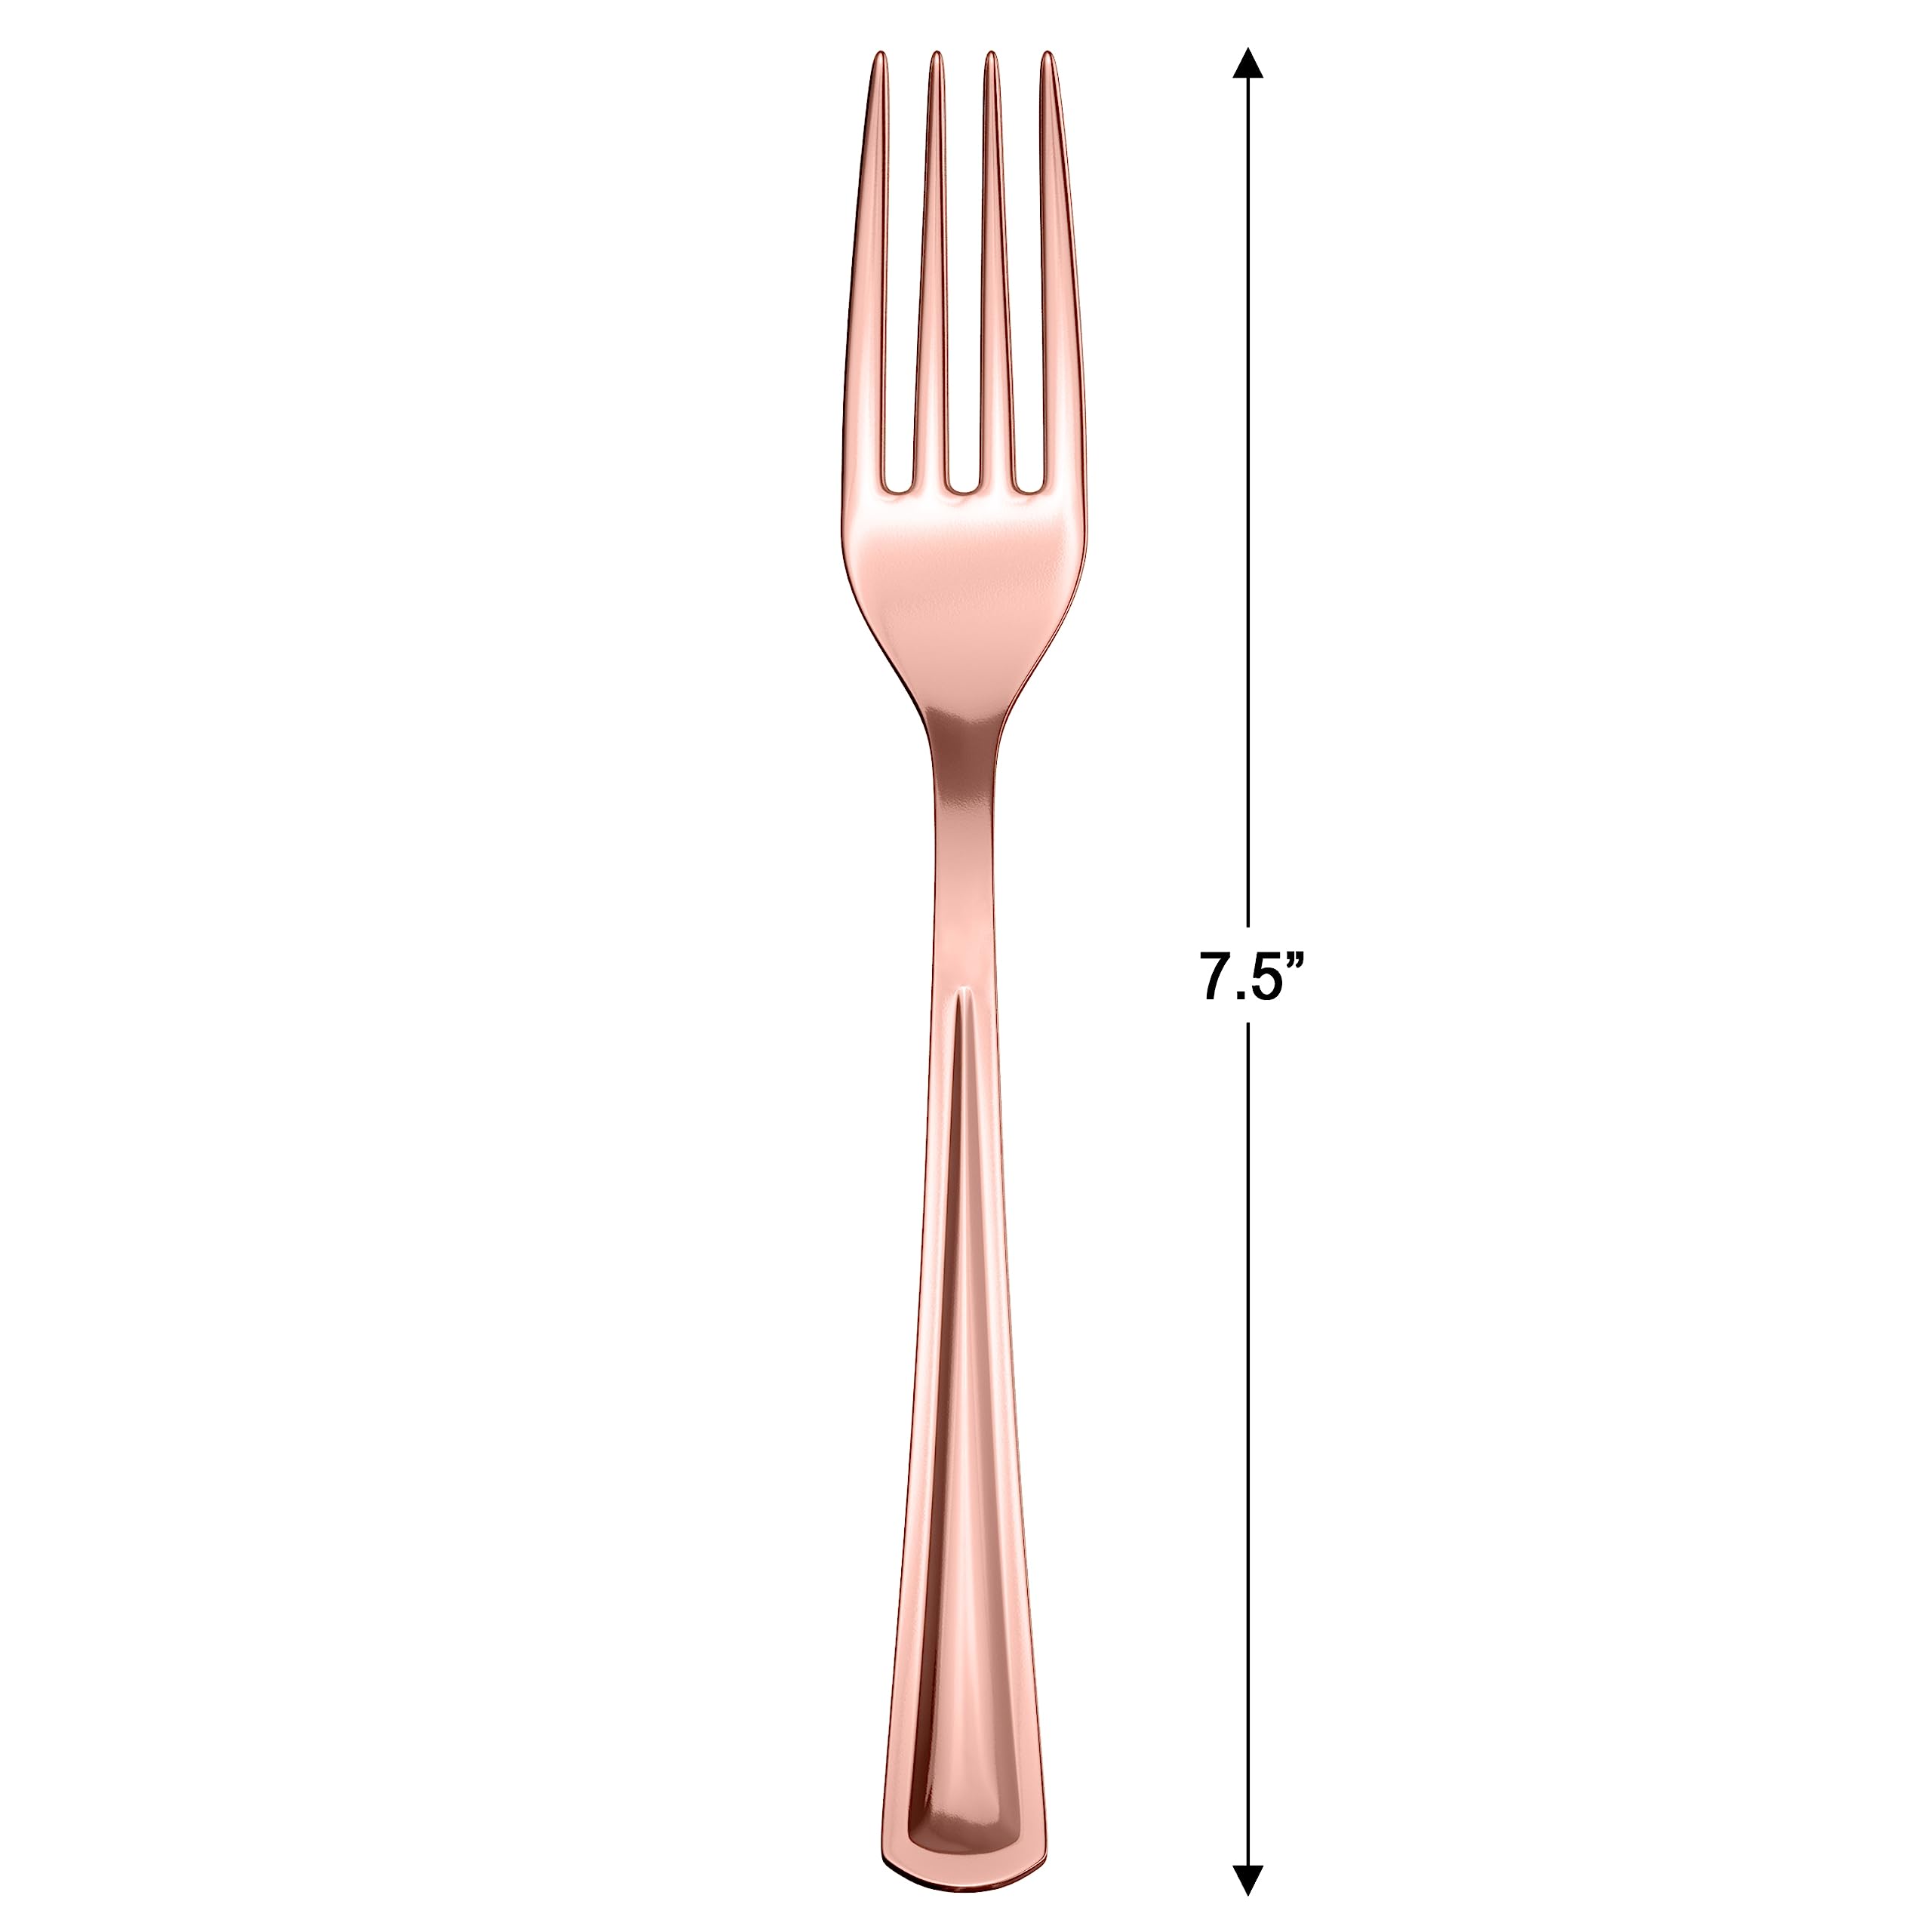 Exquisite Classic Rose Gold Plastic Forks | 20 Count